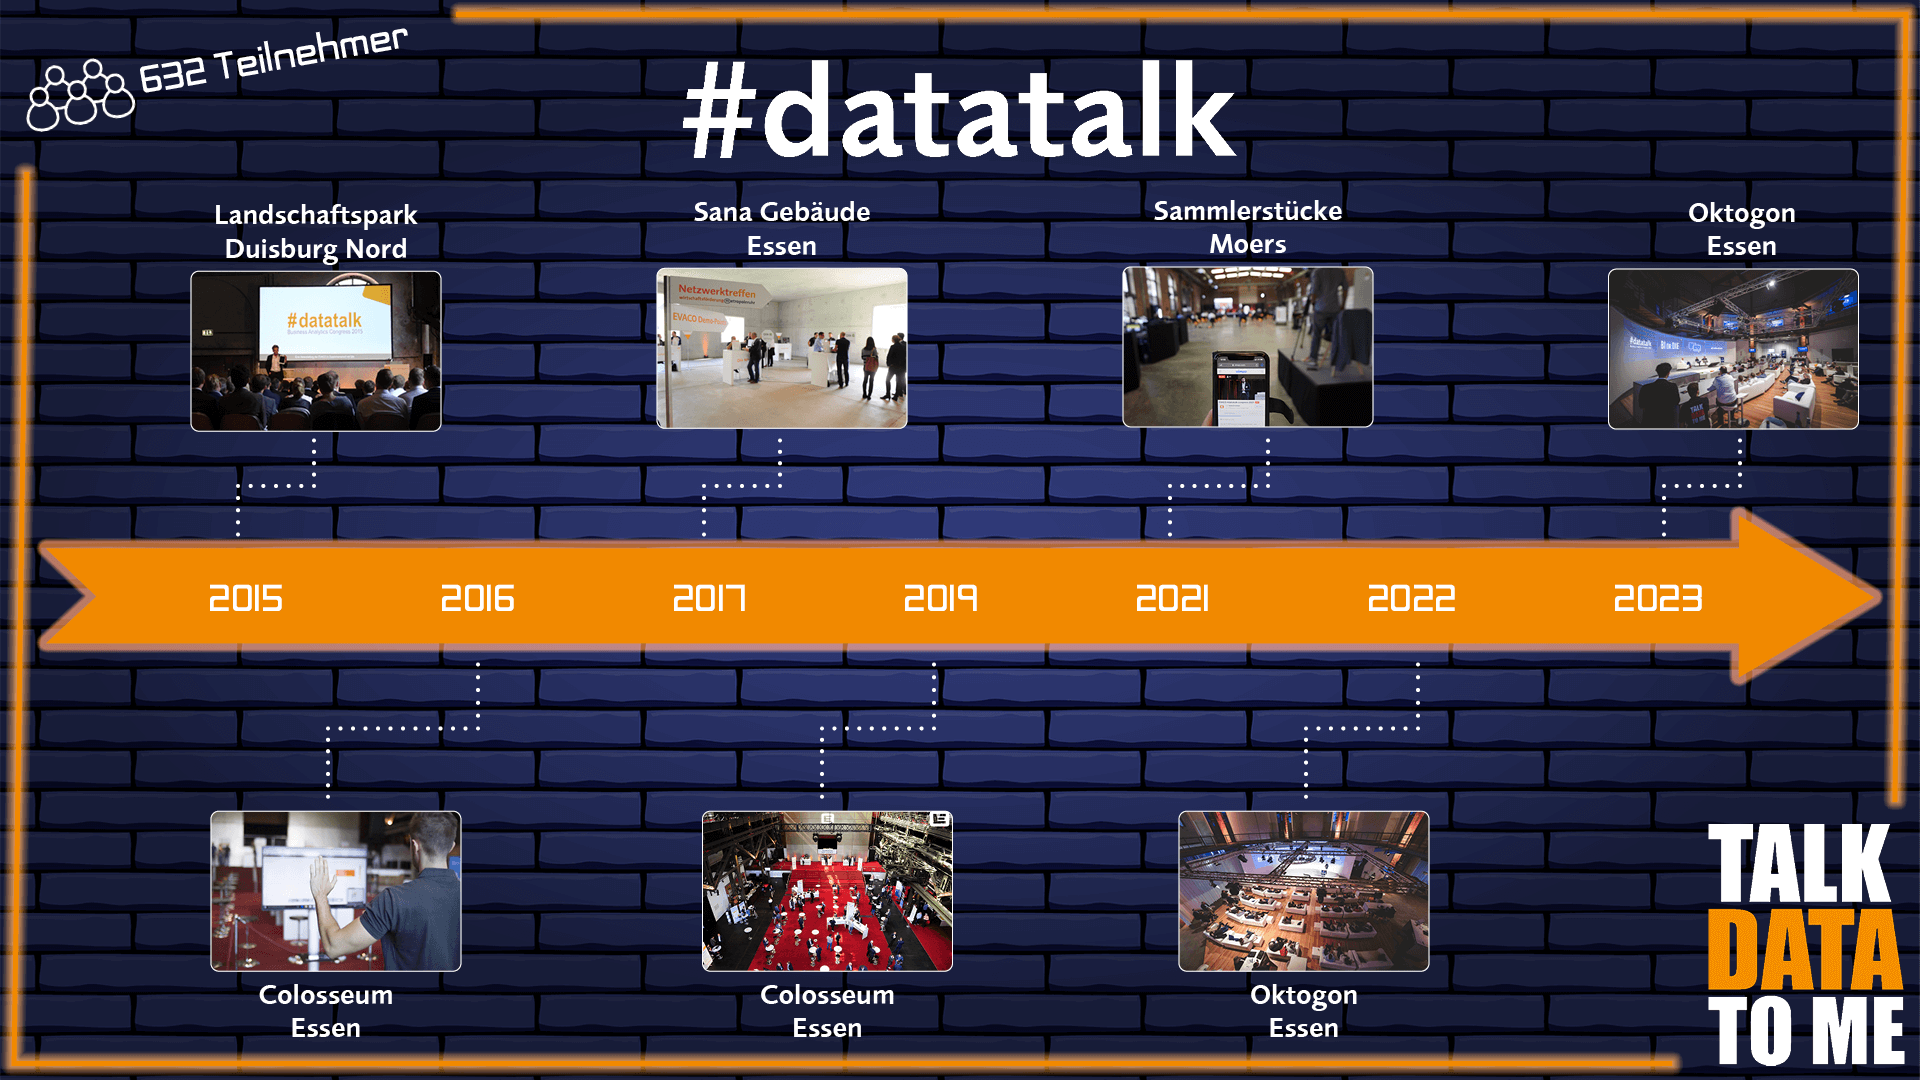 #datatalk congress Overview